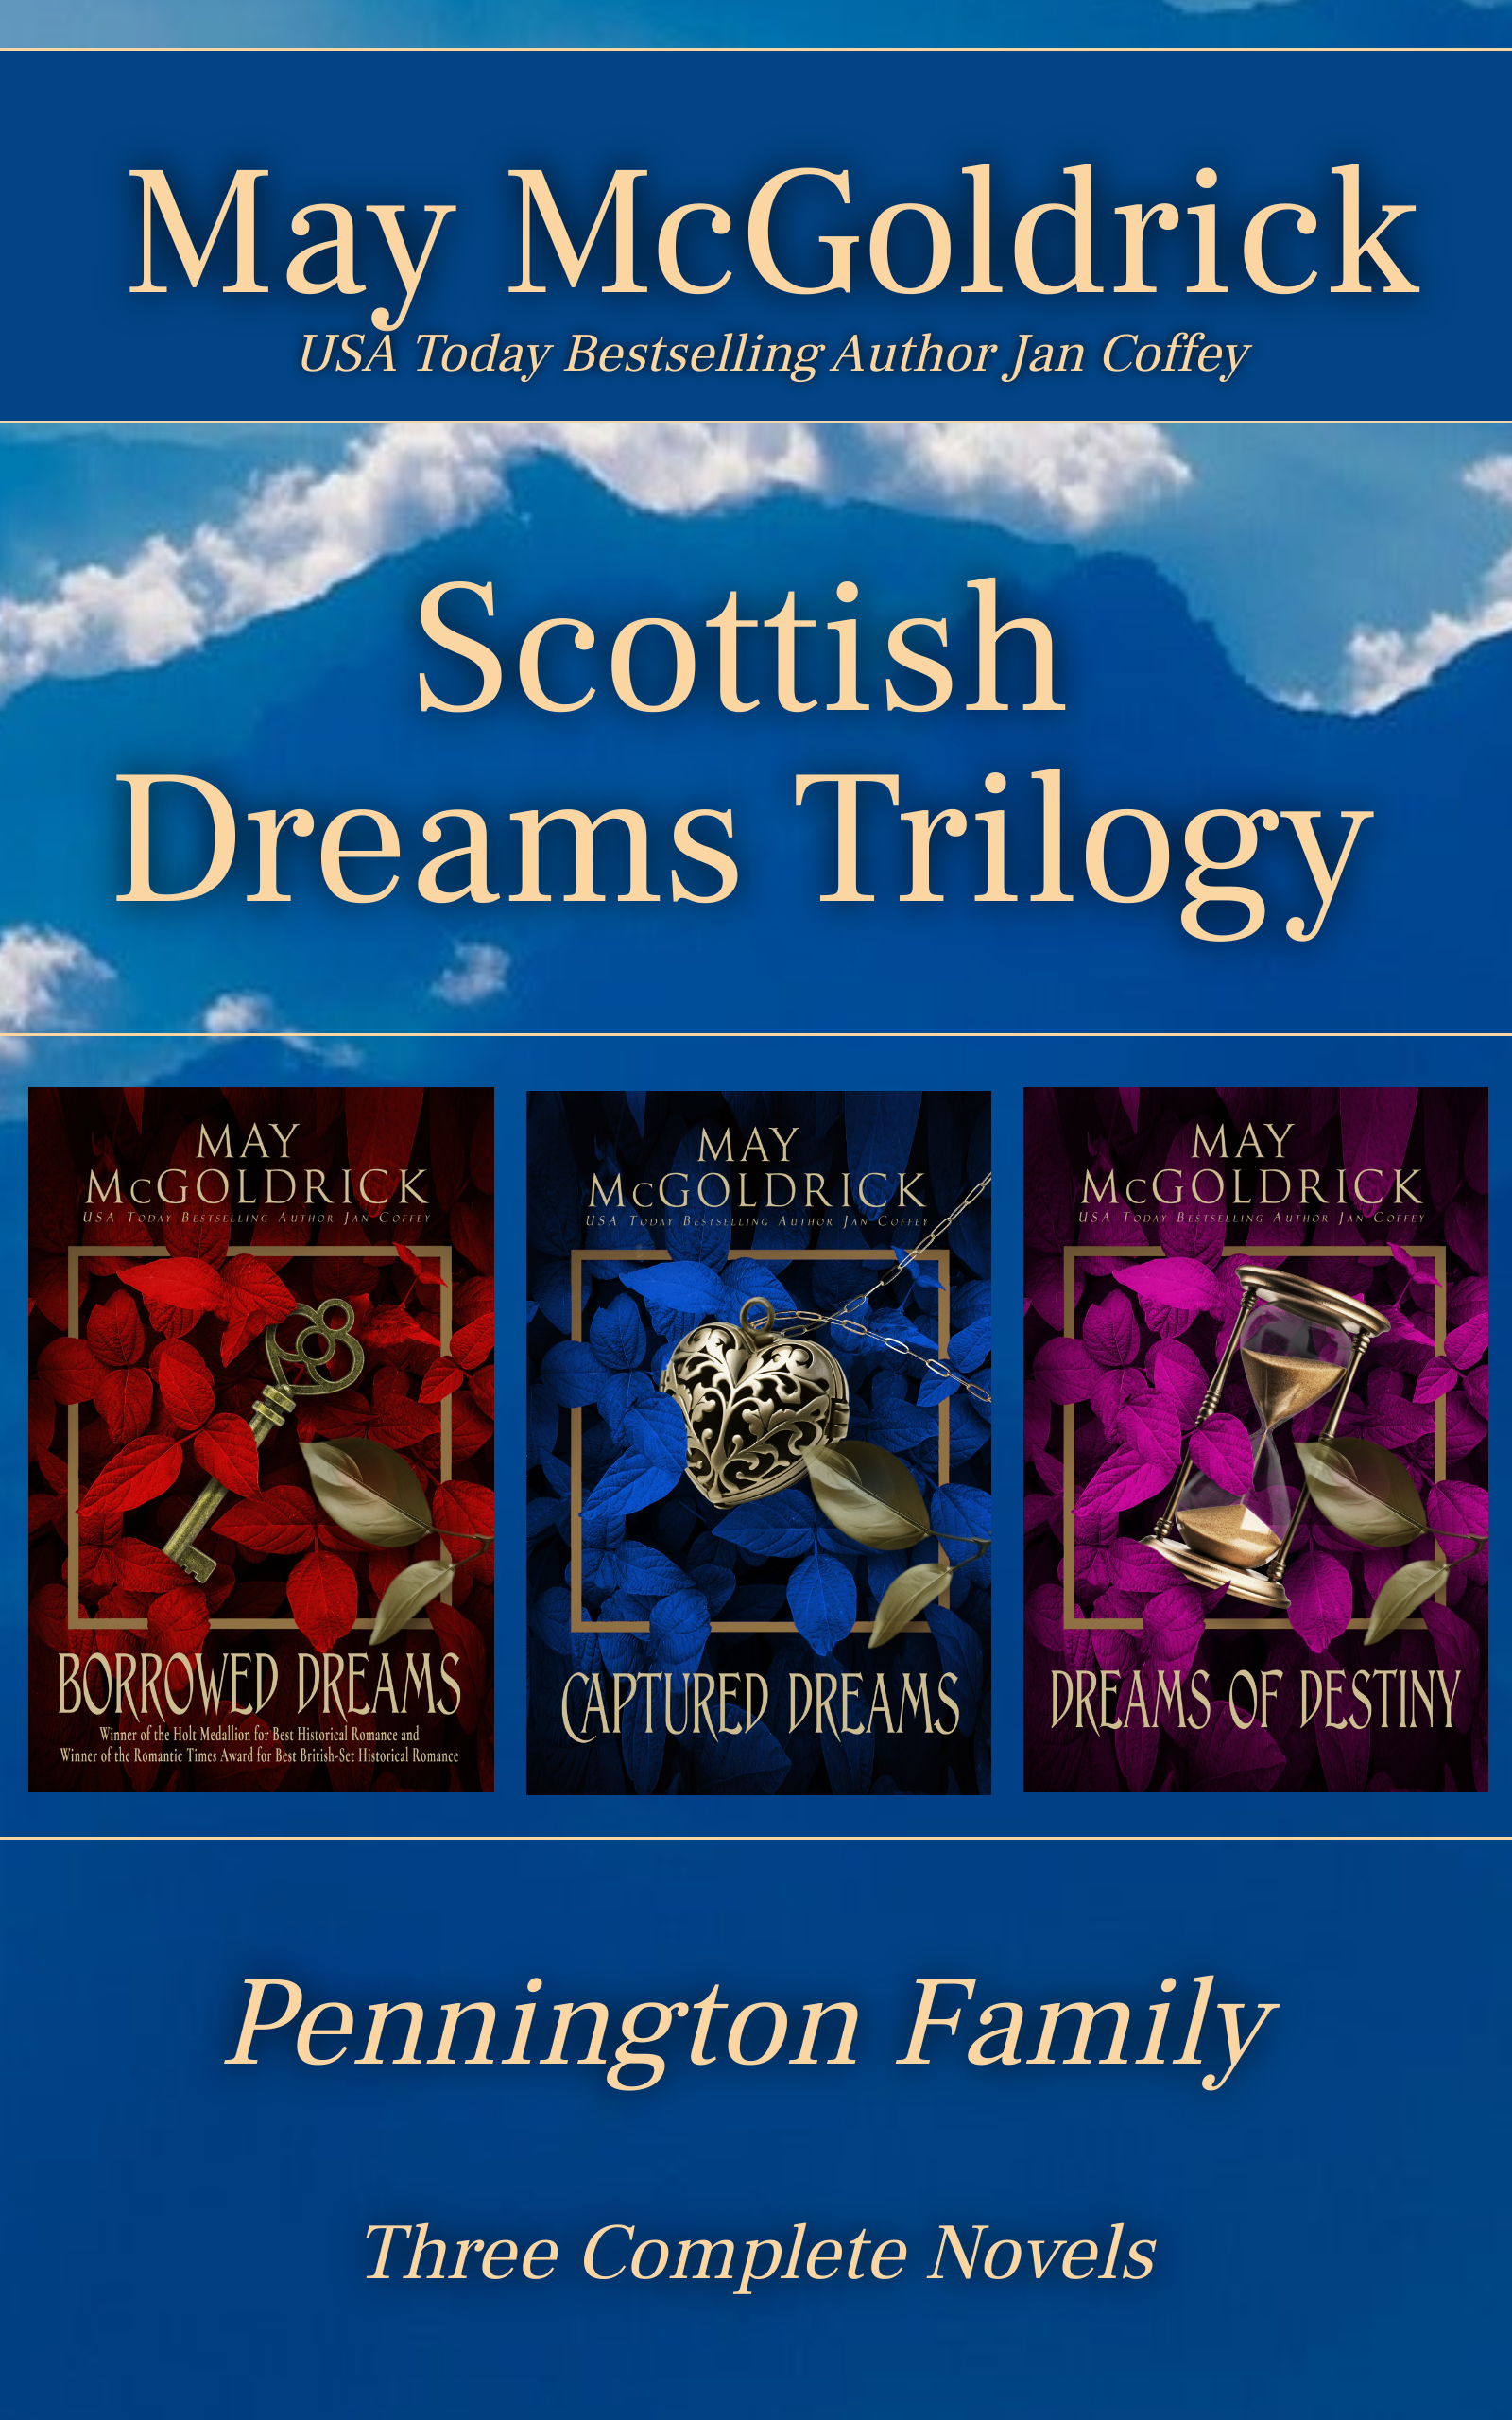 Scottish Dreams Trilogy.png